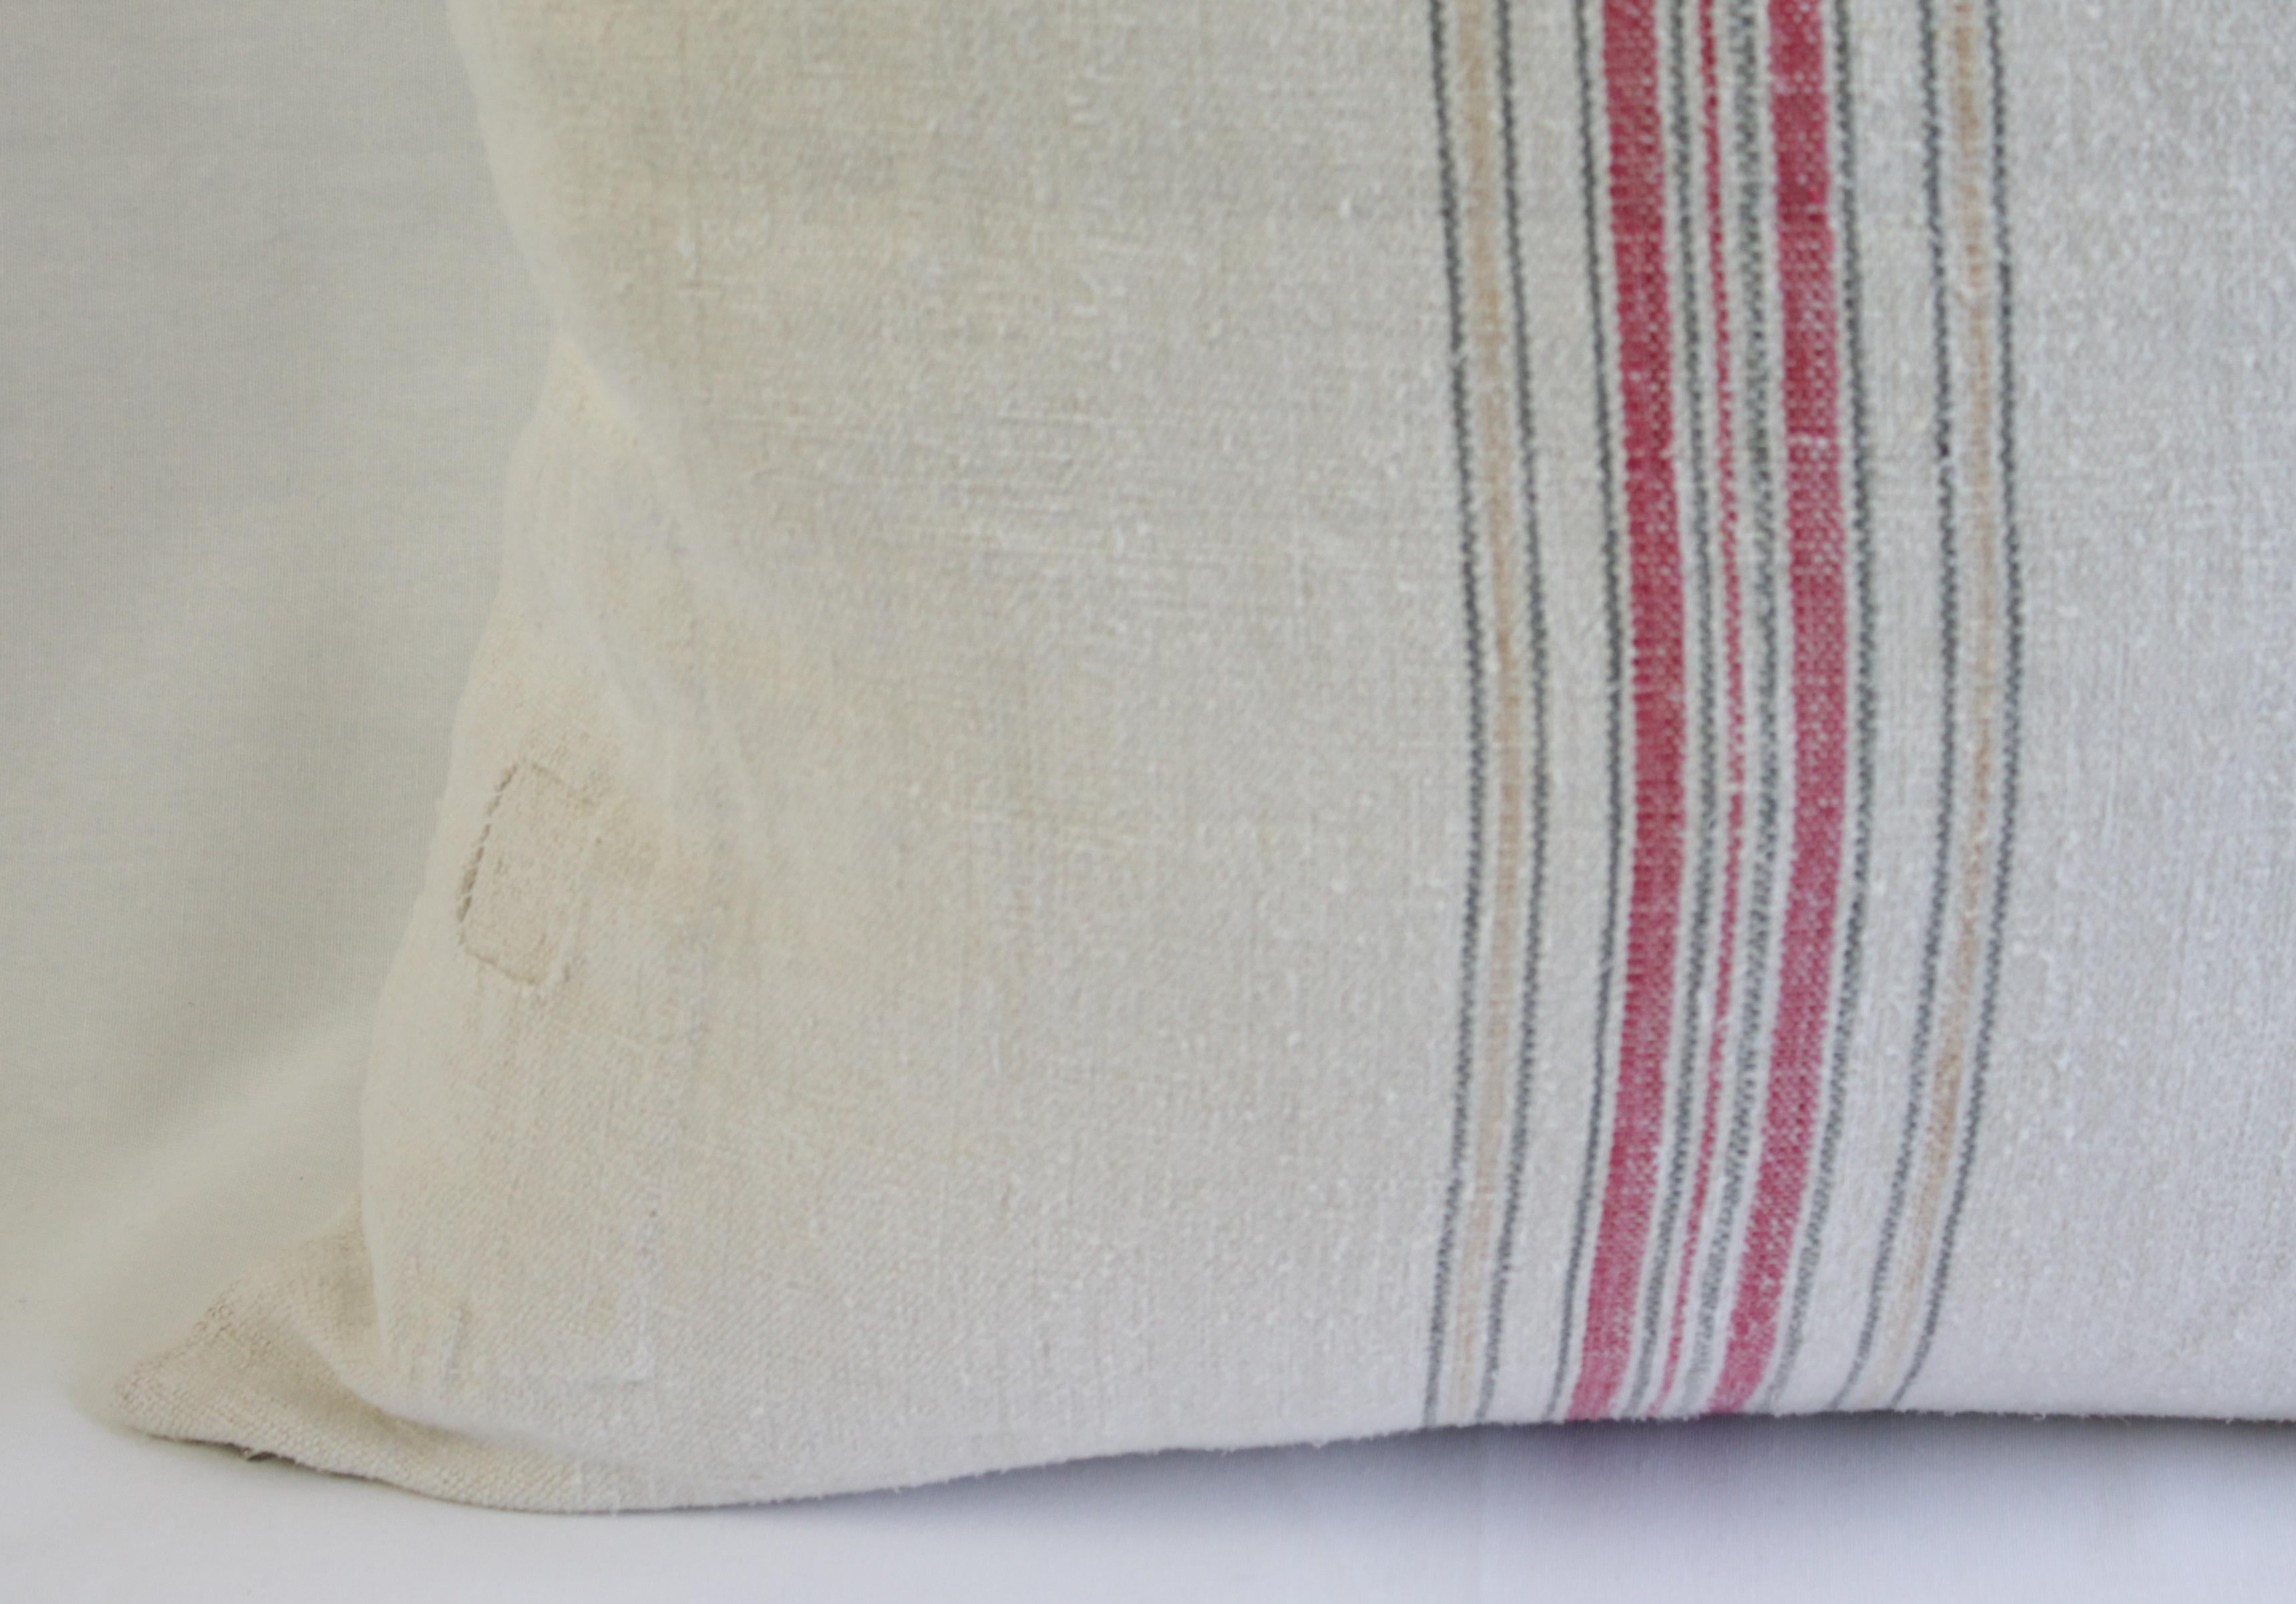 Antique Nubby 19th Century European Red and Tan Stripe Grain Sack Pillows 6